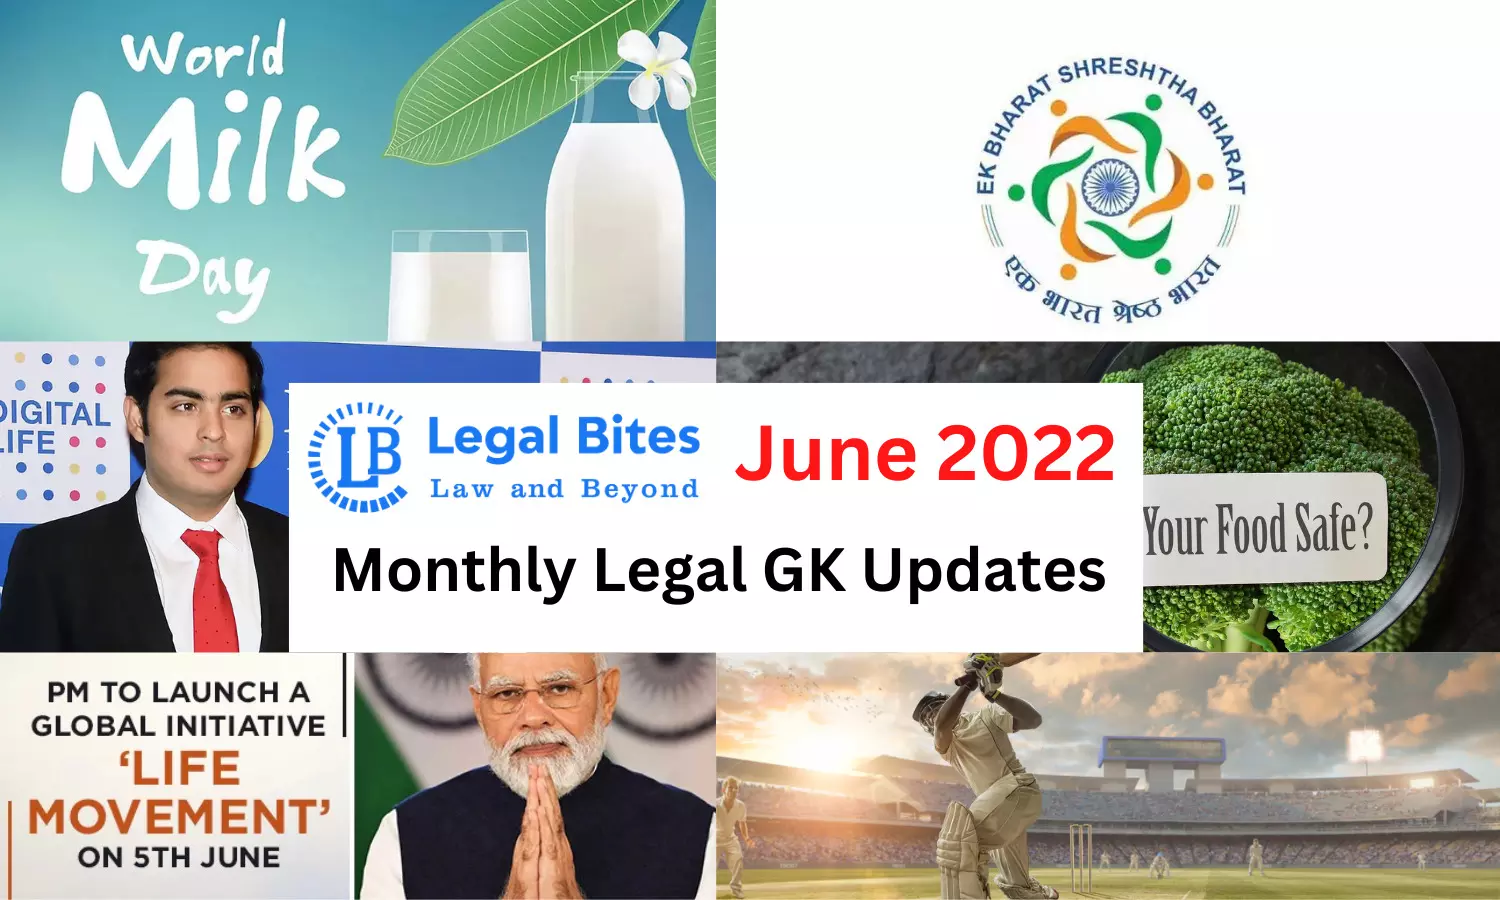 Legal Bites June 2022: Monthly Legal GK Updates